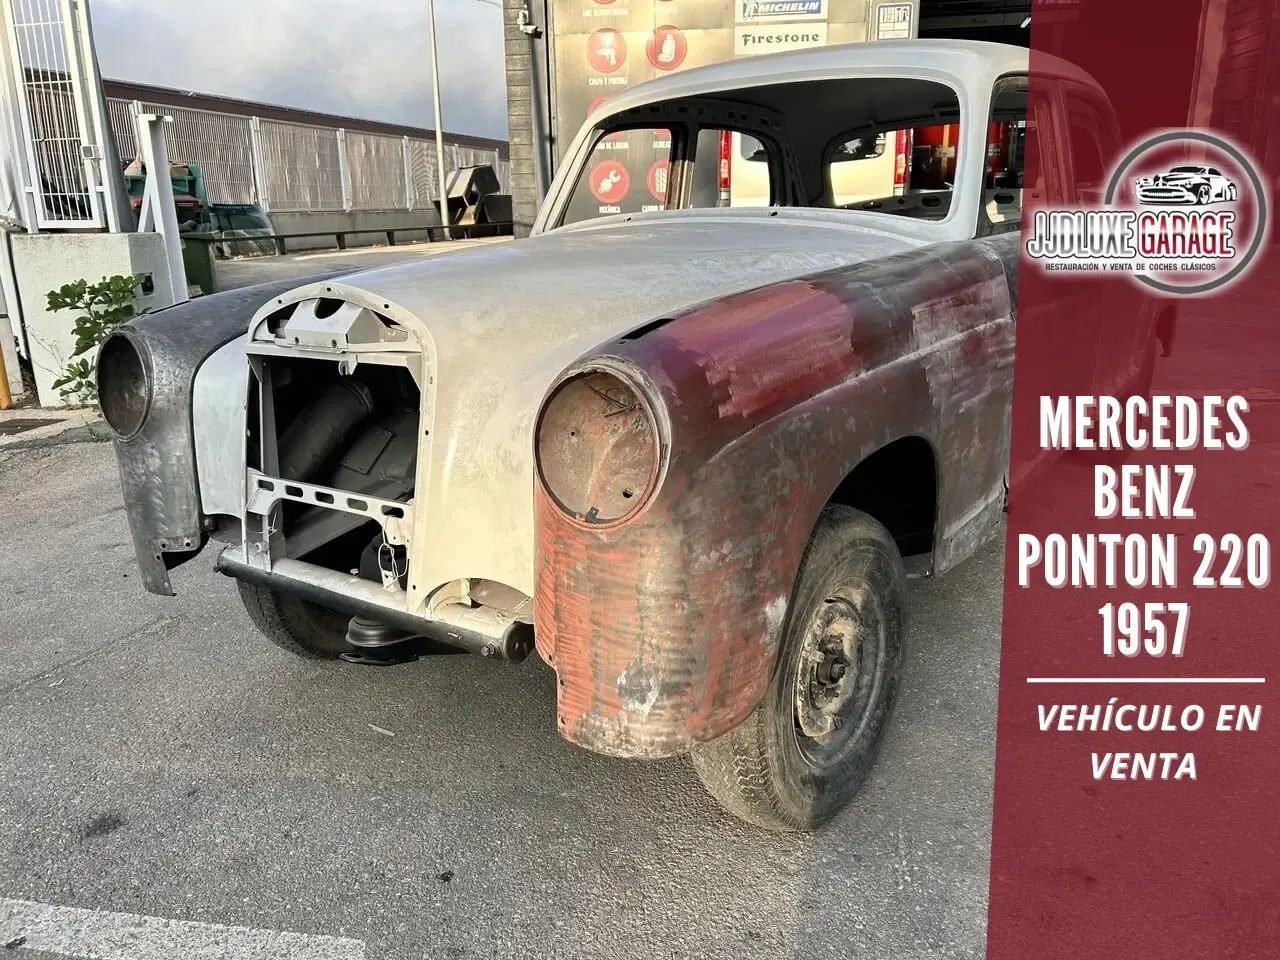 mercedes-benz-ponton-220-segunda-mano-en-venta-restaurar-1957-comprar-coche-clasico-jjdluxe-garage-ibi-alicante-portada